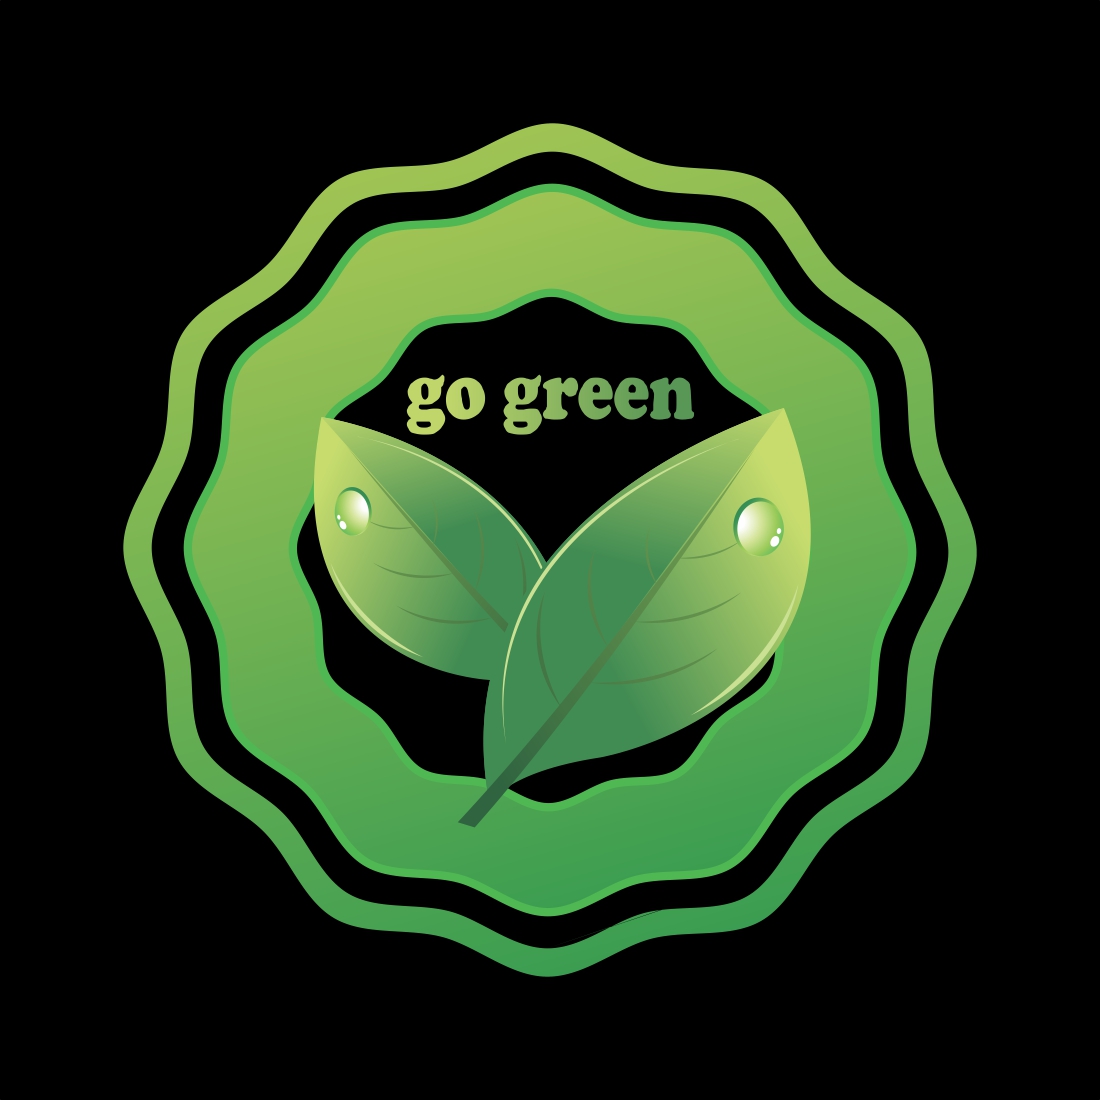 go green logo preview image.